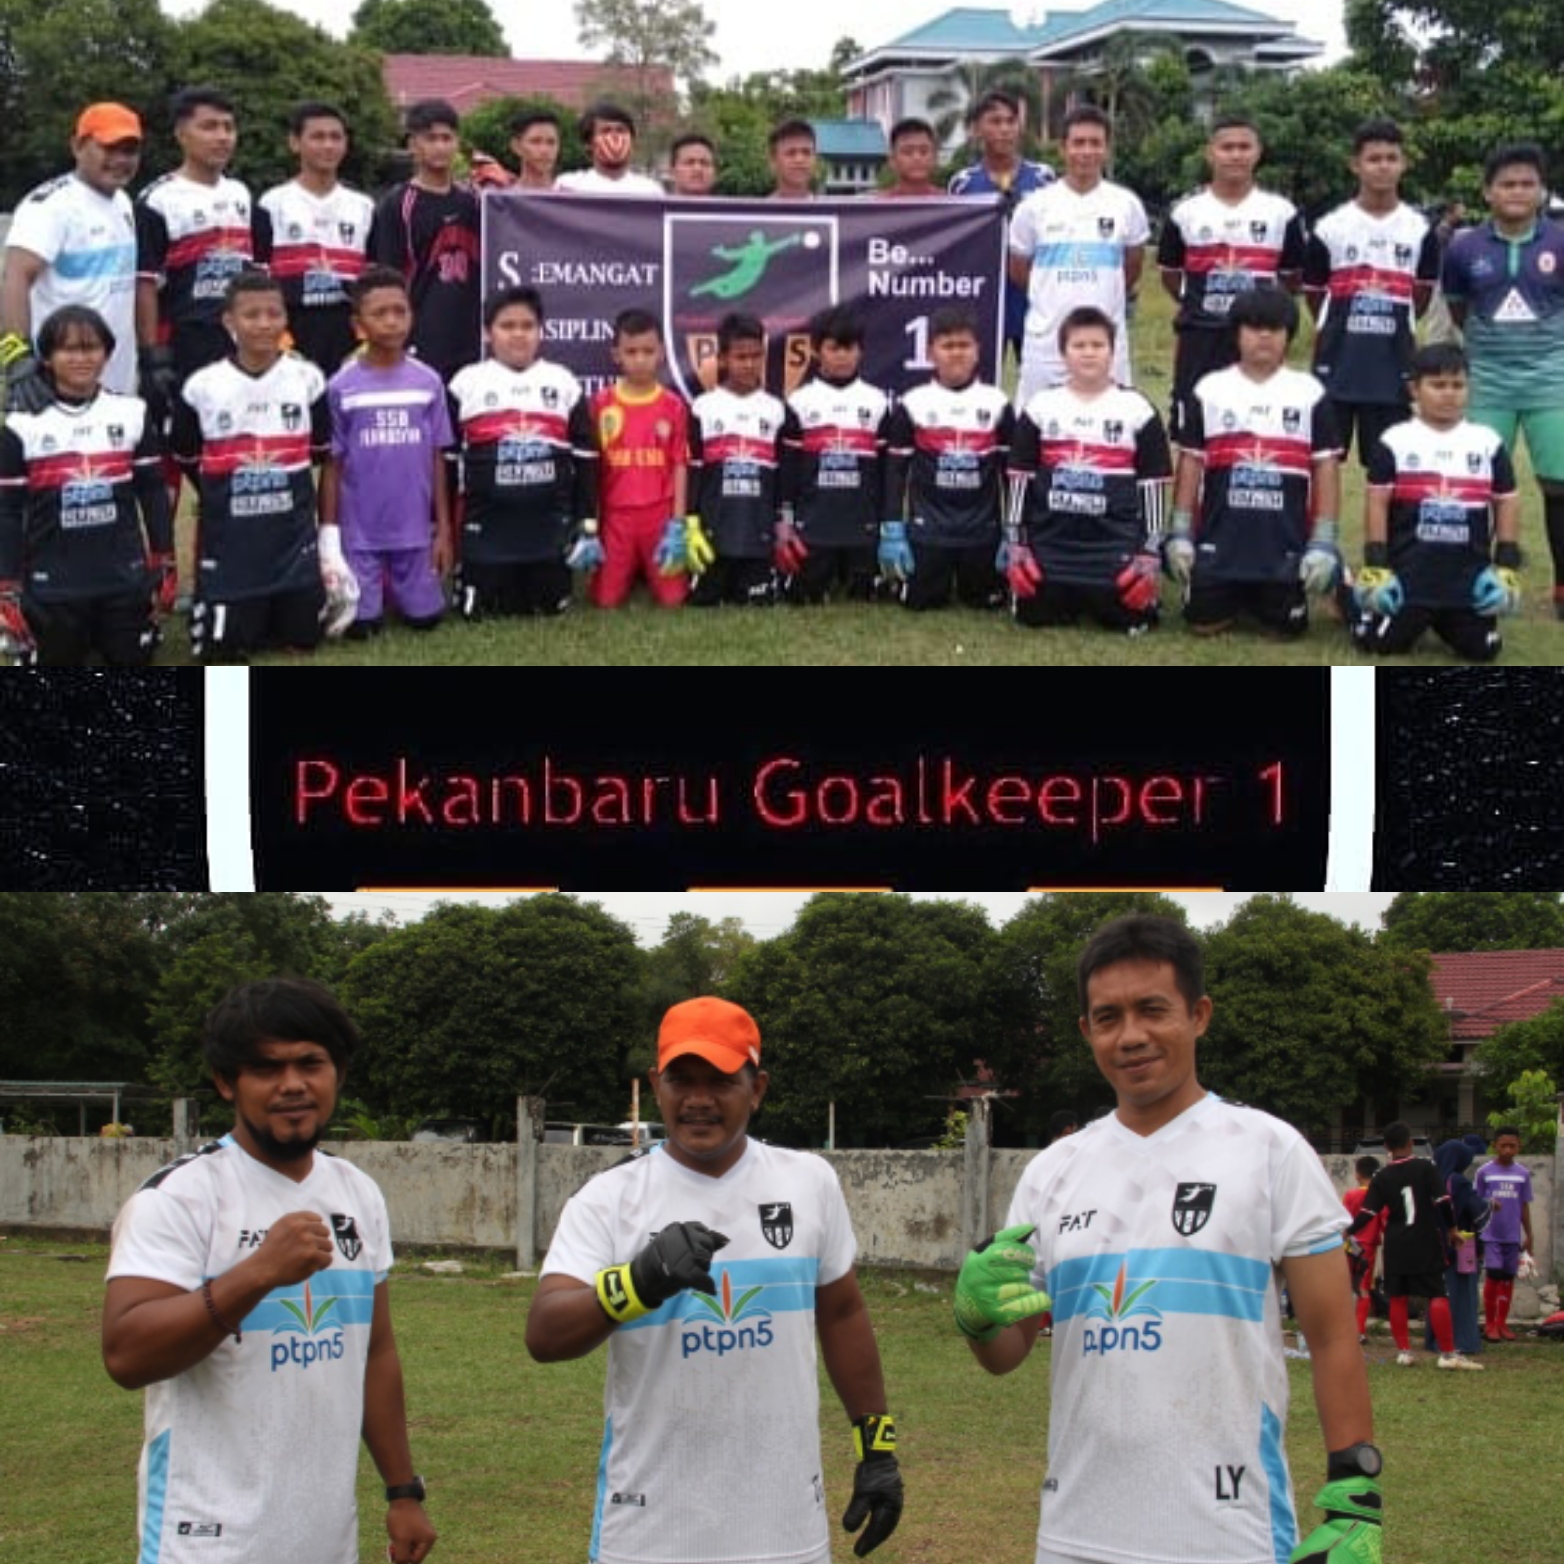 Cetak Penjaga Gawang Hebat, Legenda PSPS Dirikan Pekanbaru Goalkeepers1